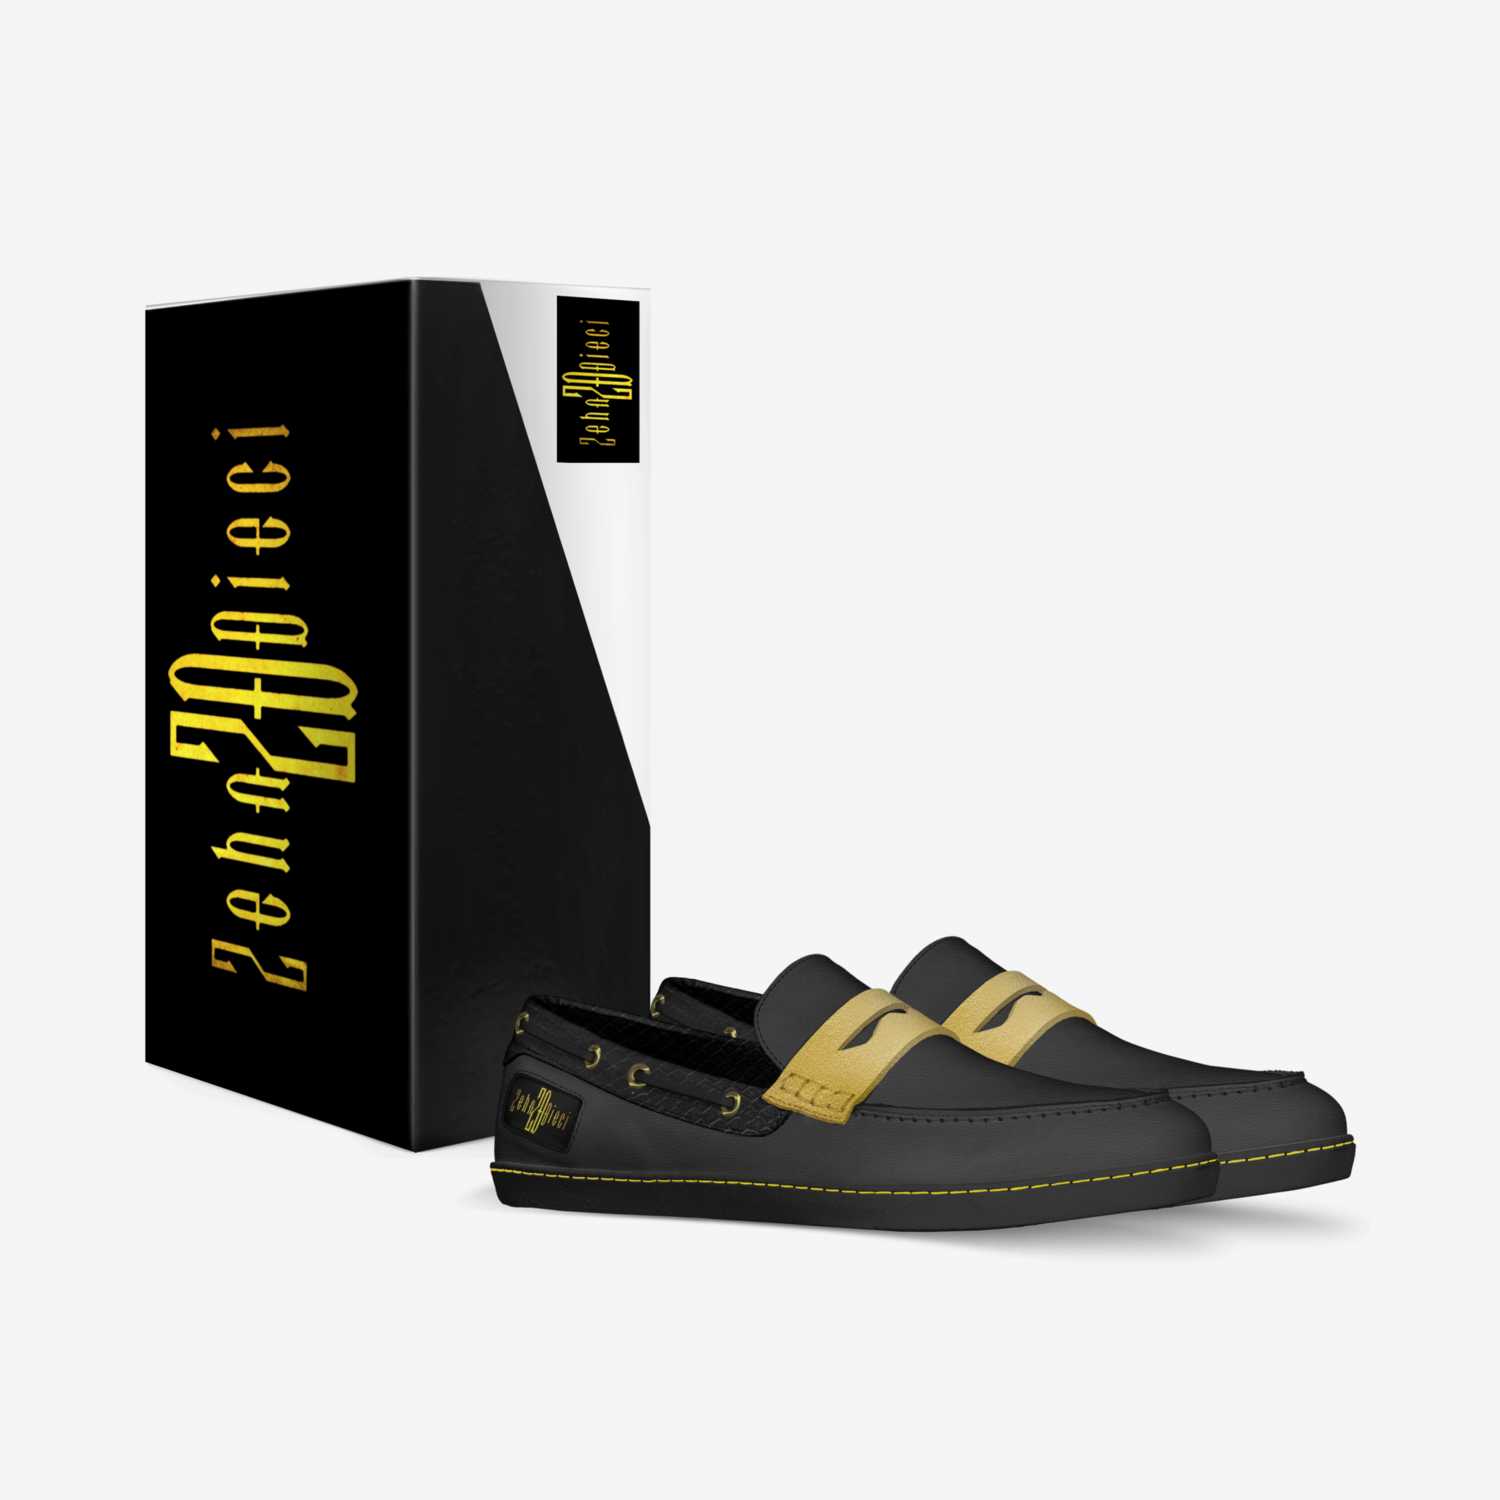 Praesidis custom made in Italy shoes by Zehn Dieci | Box view